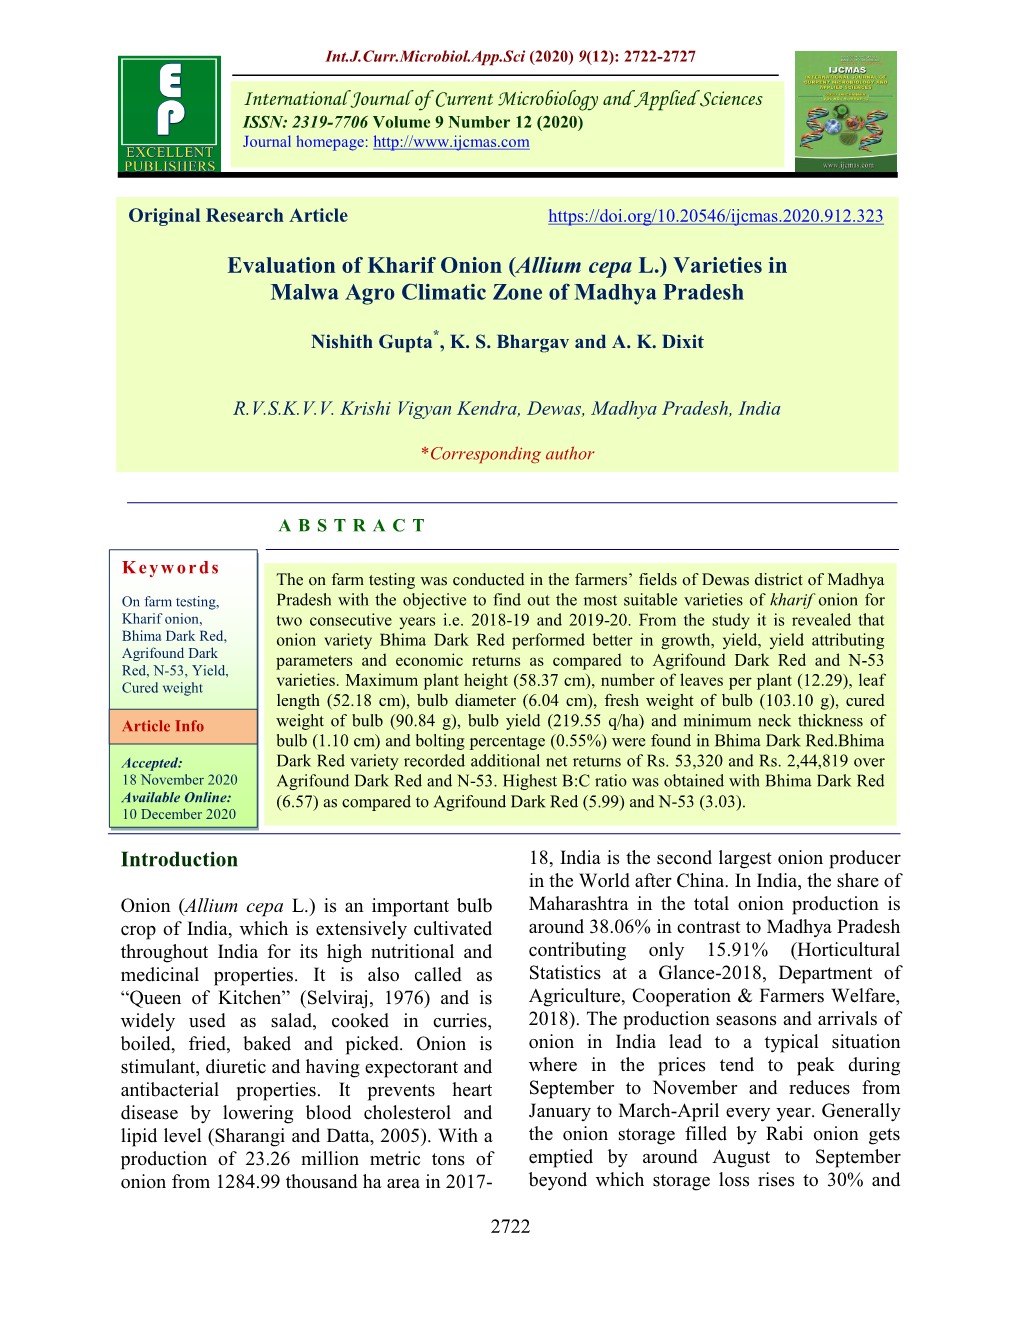 Evaluation of Kharif Onion (Allium Cepa L.) Varieties in Malwa Agro Climatic Zone of Madhya Pradesh